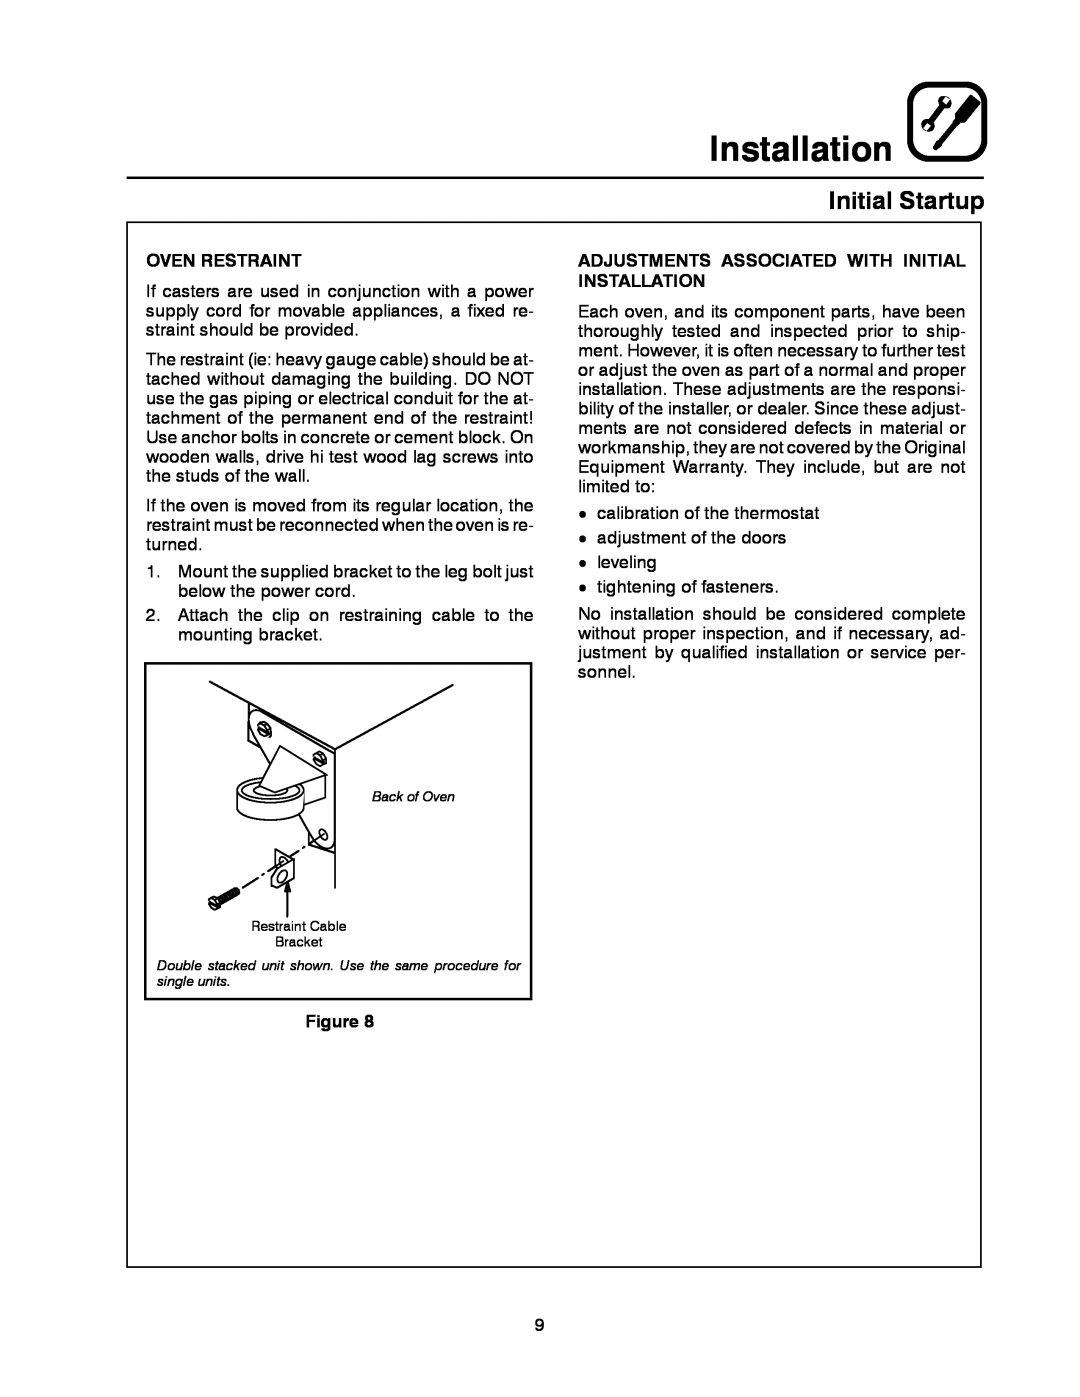 Blodgett MARK V XCEL CONVECTION OVEN manual Installation, Initial Startup, Oven Restraint 